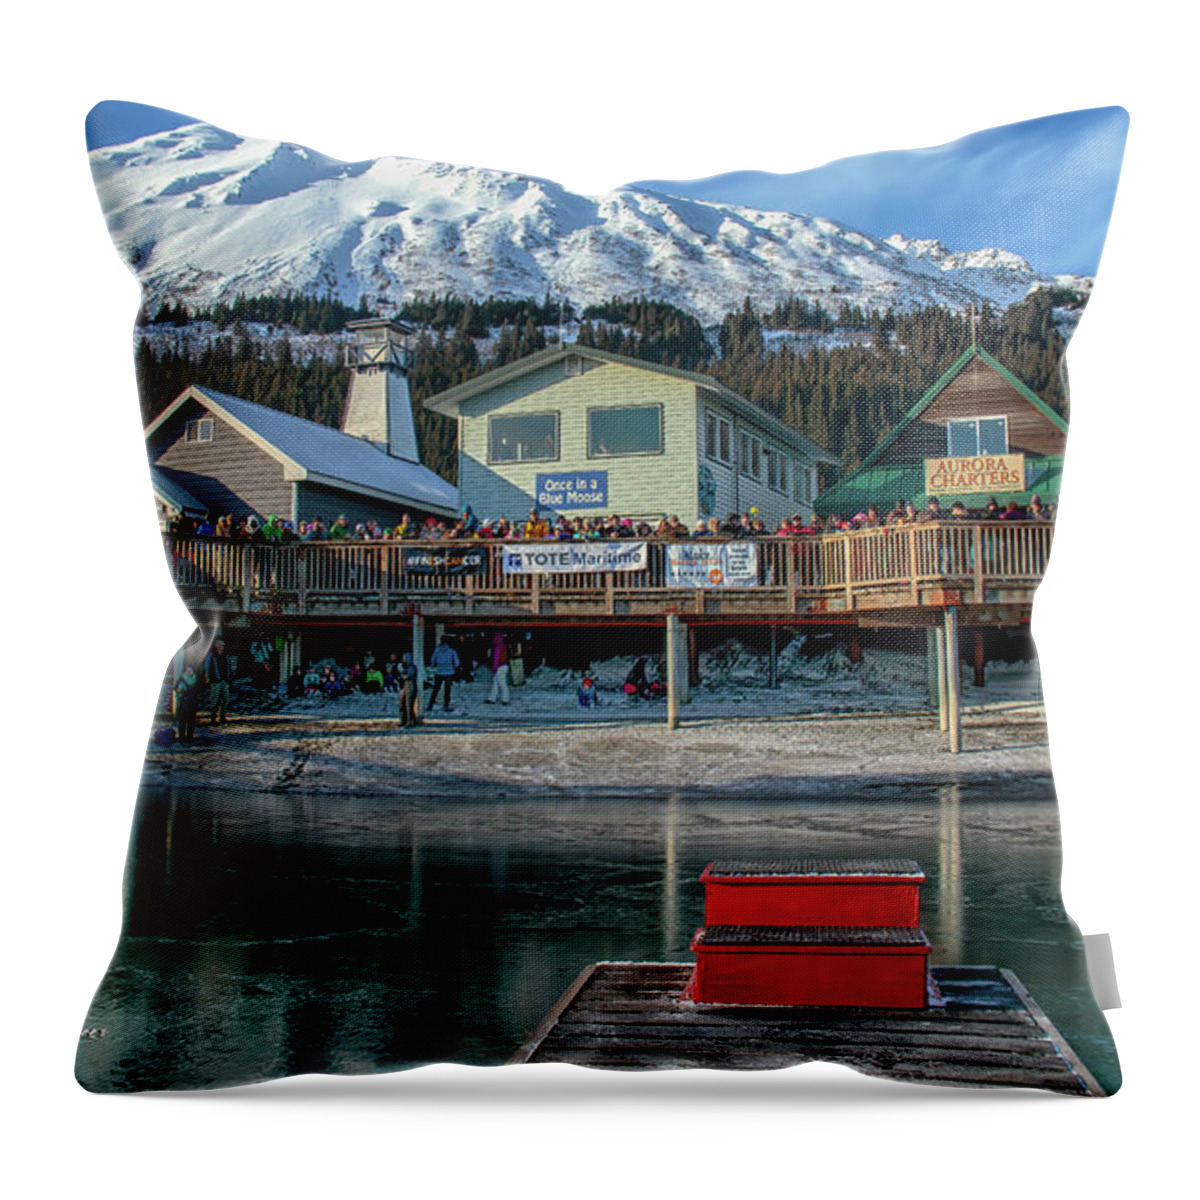  Throw Pillow featuring the photograph Seward Alaska #1 by Michael W Rogers